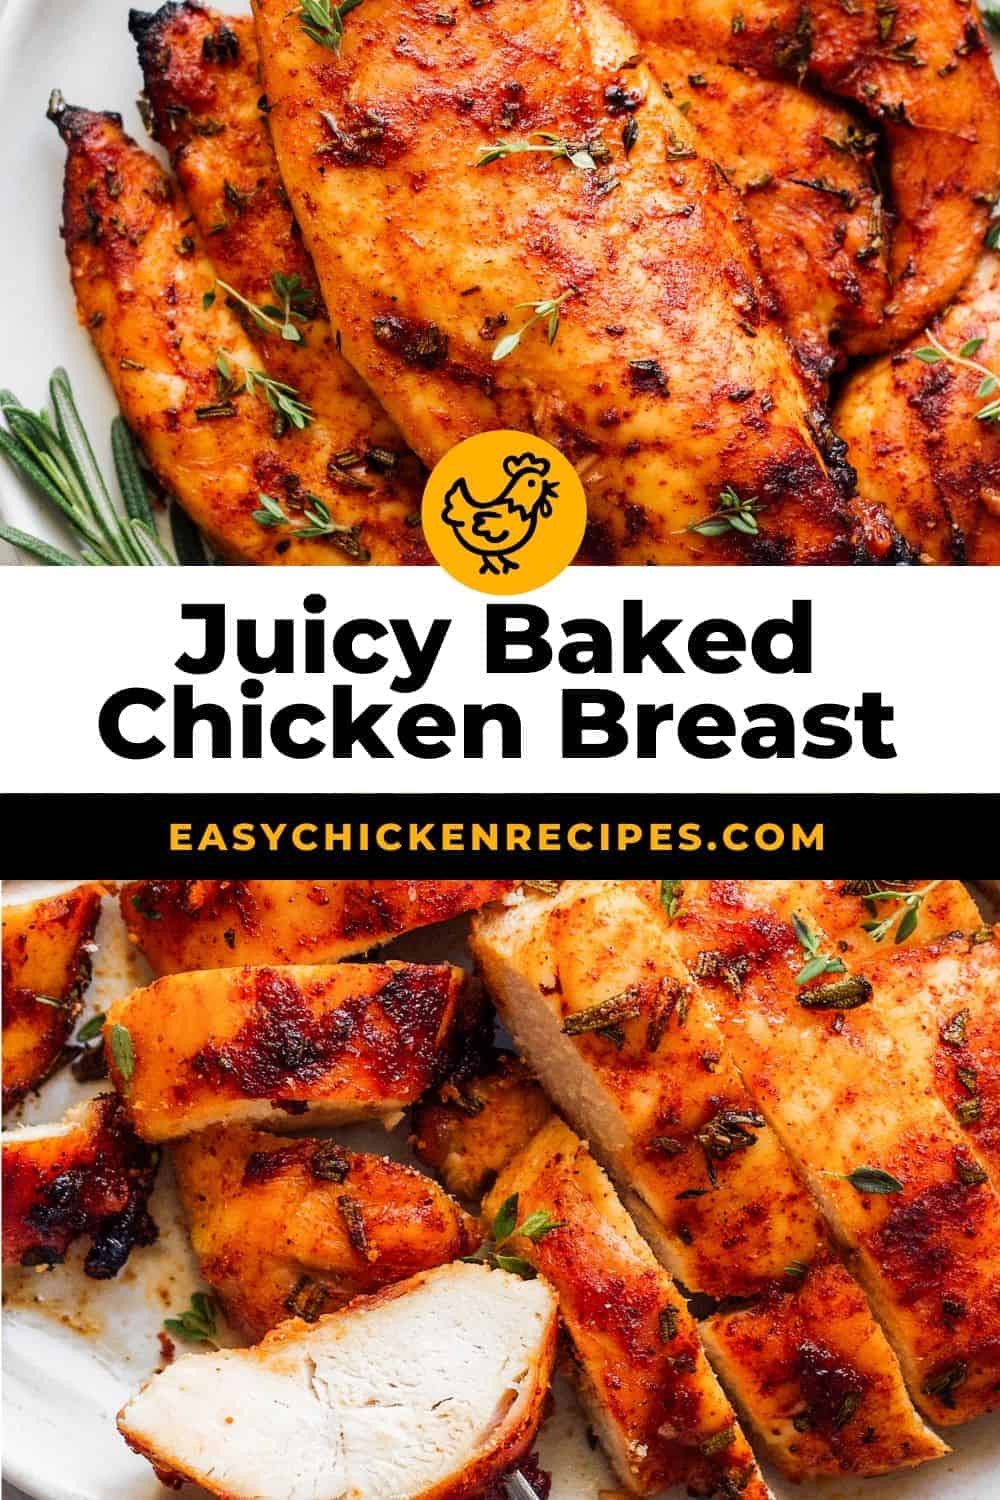 Baked Chicken Breast (So Juicy!) - Easy Chicken Recipes